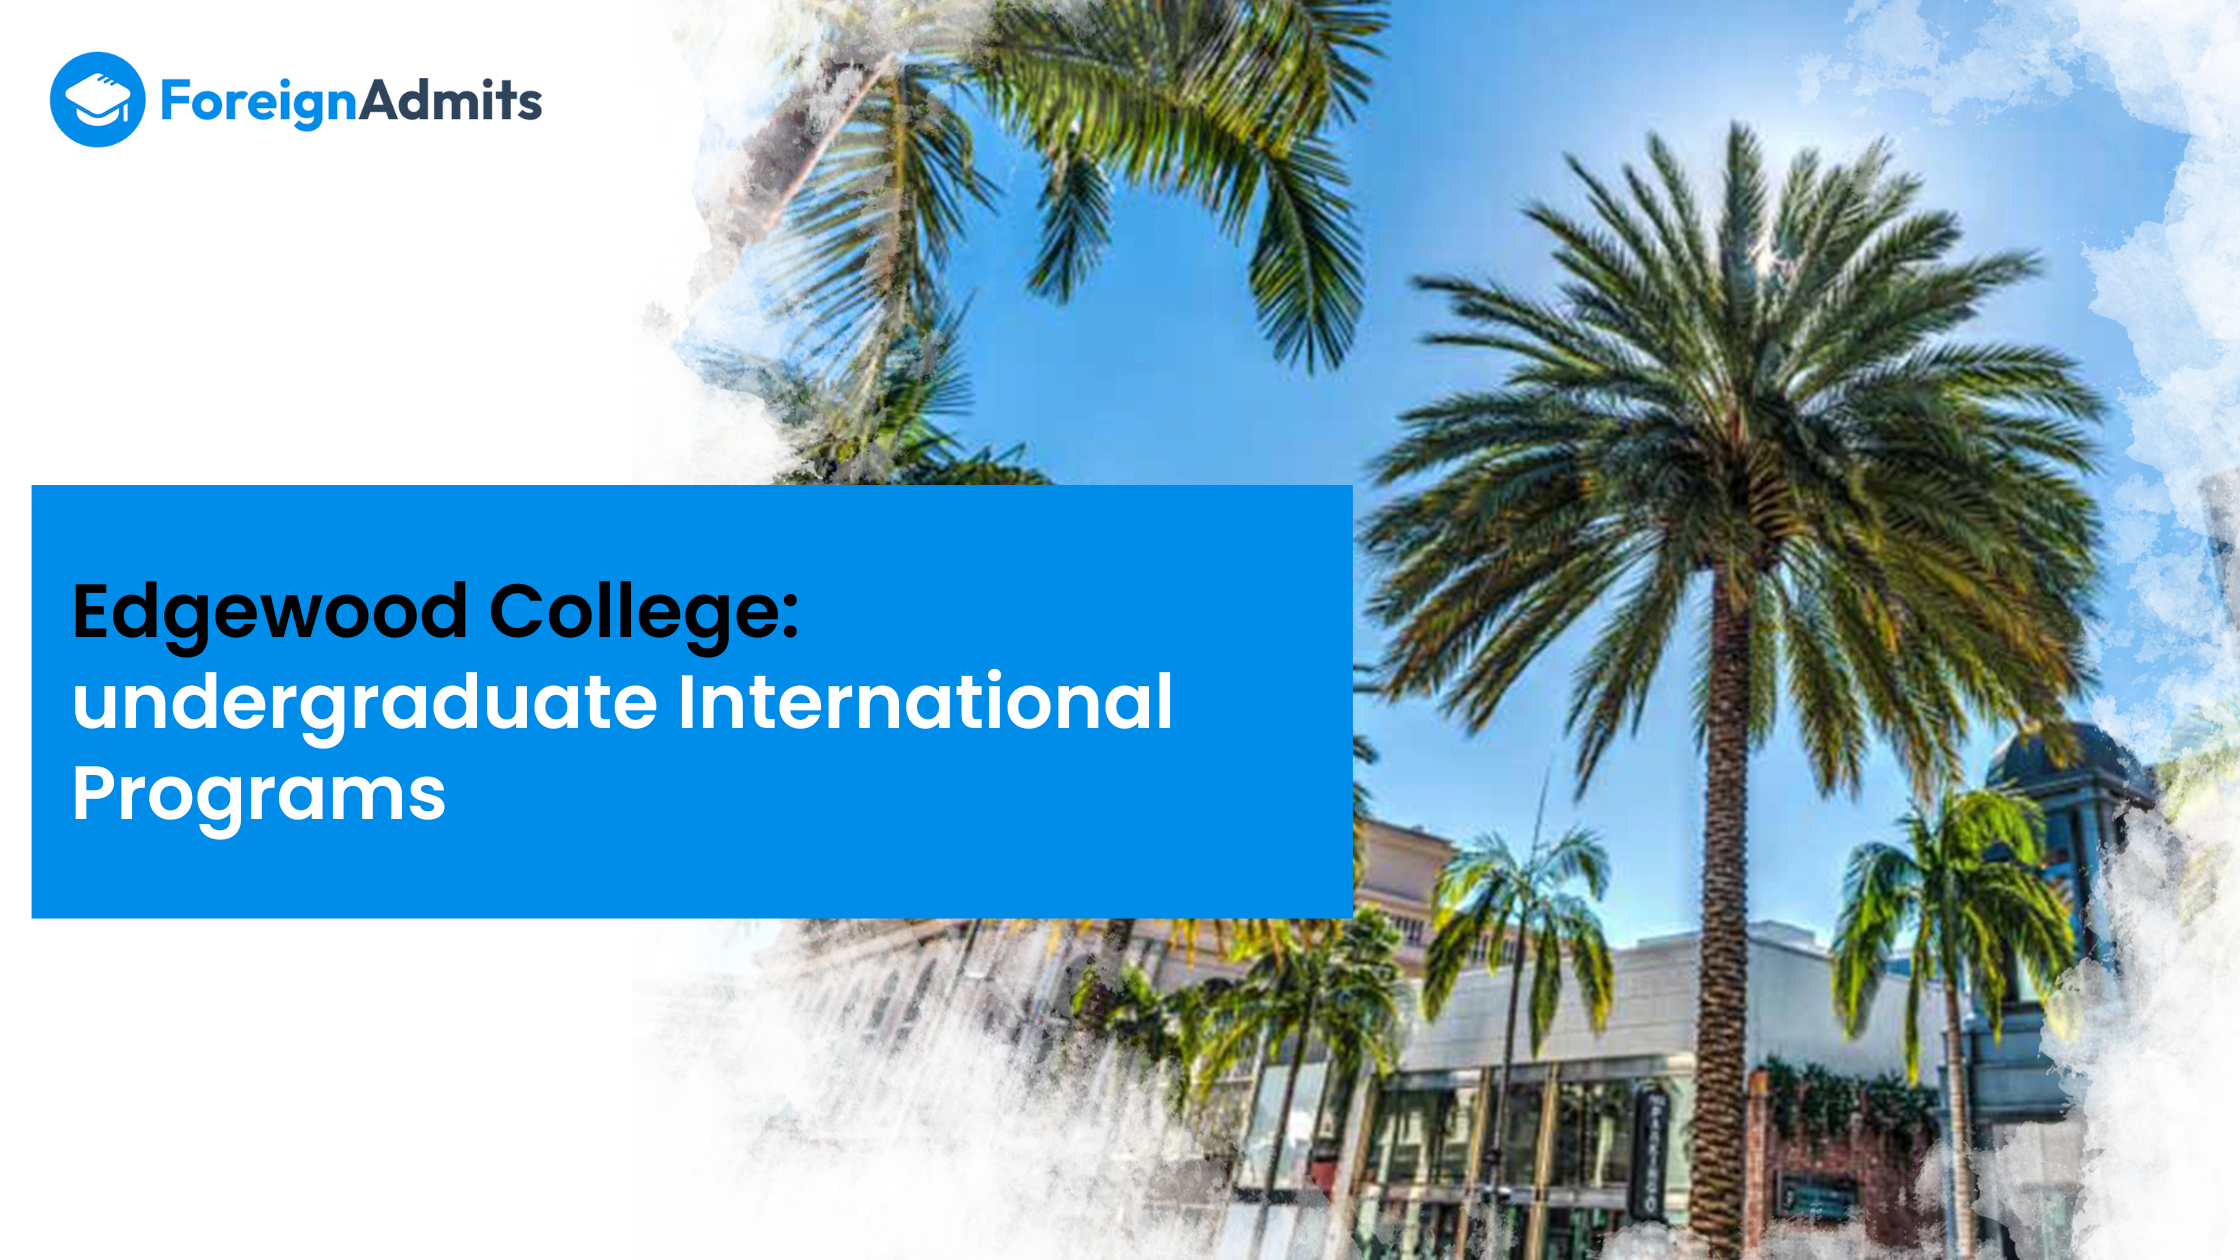 Edgewood College: undergraduate International Programs